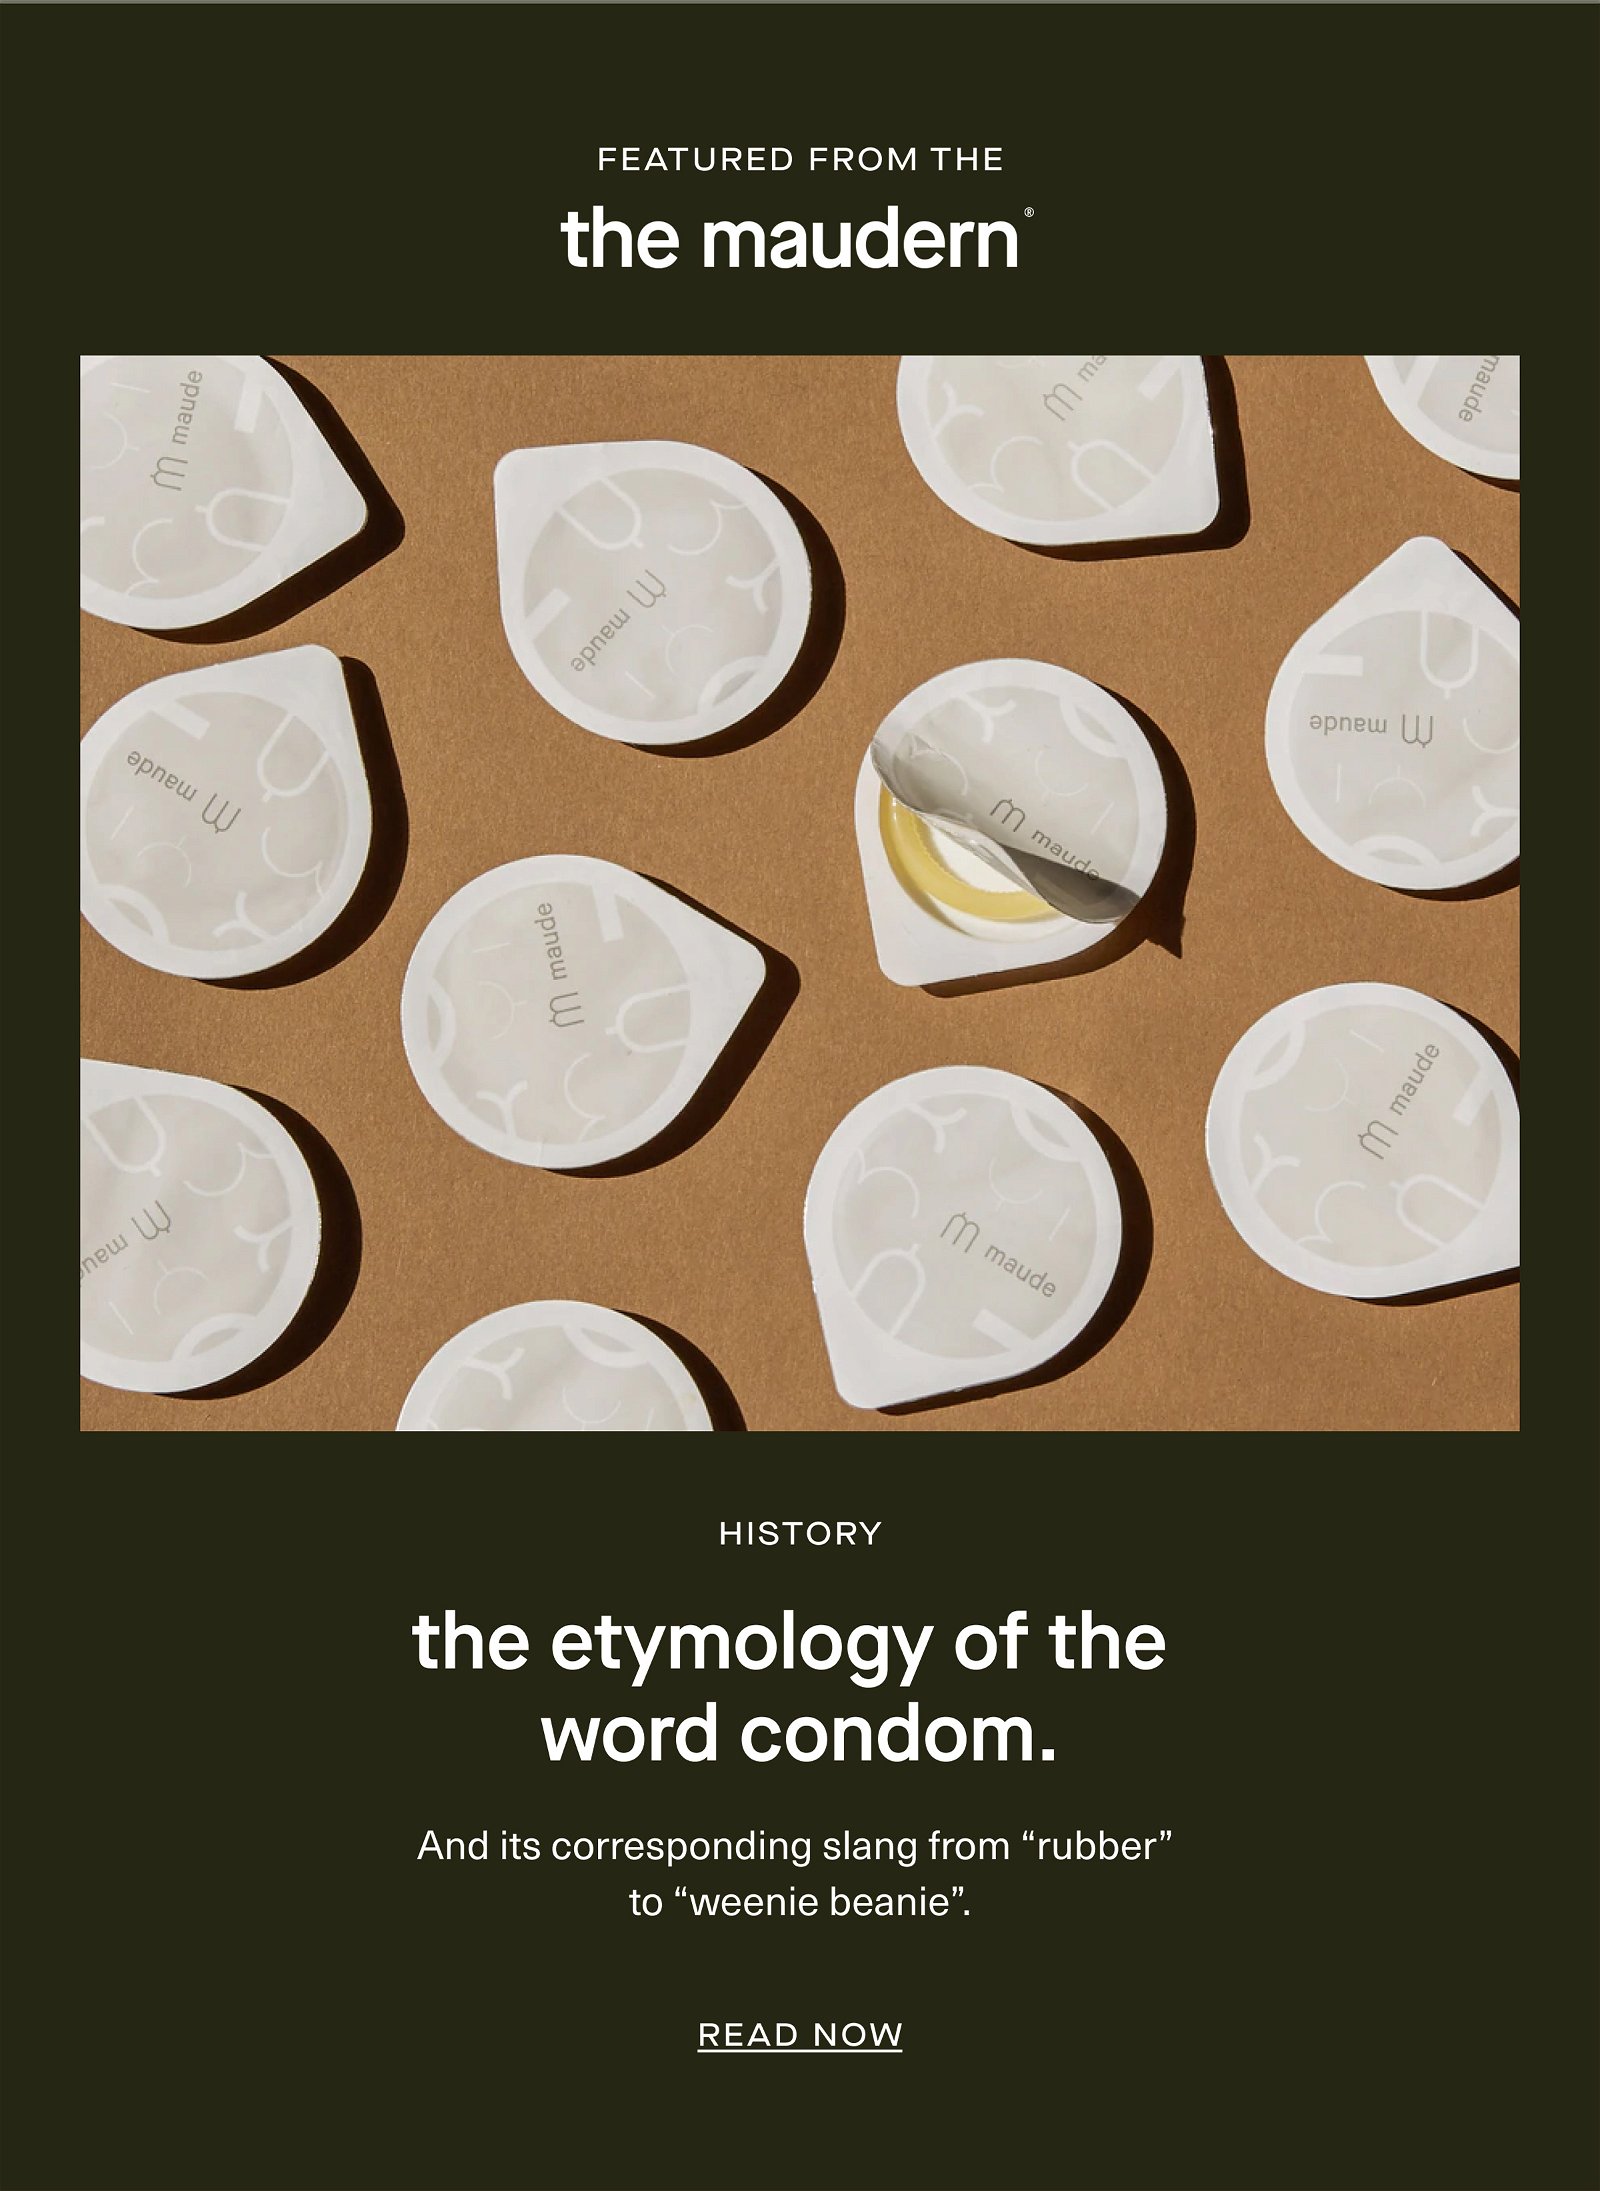 Etymology of the word condom.